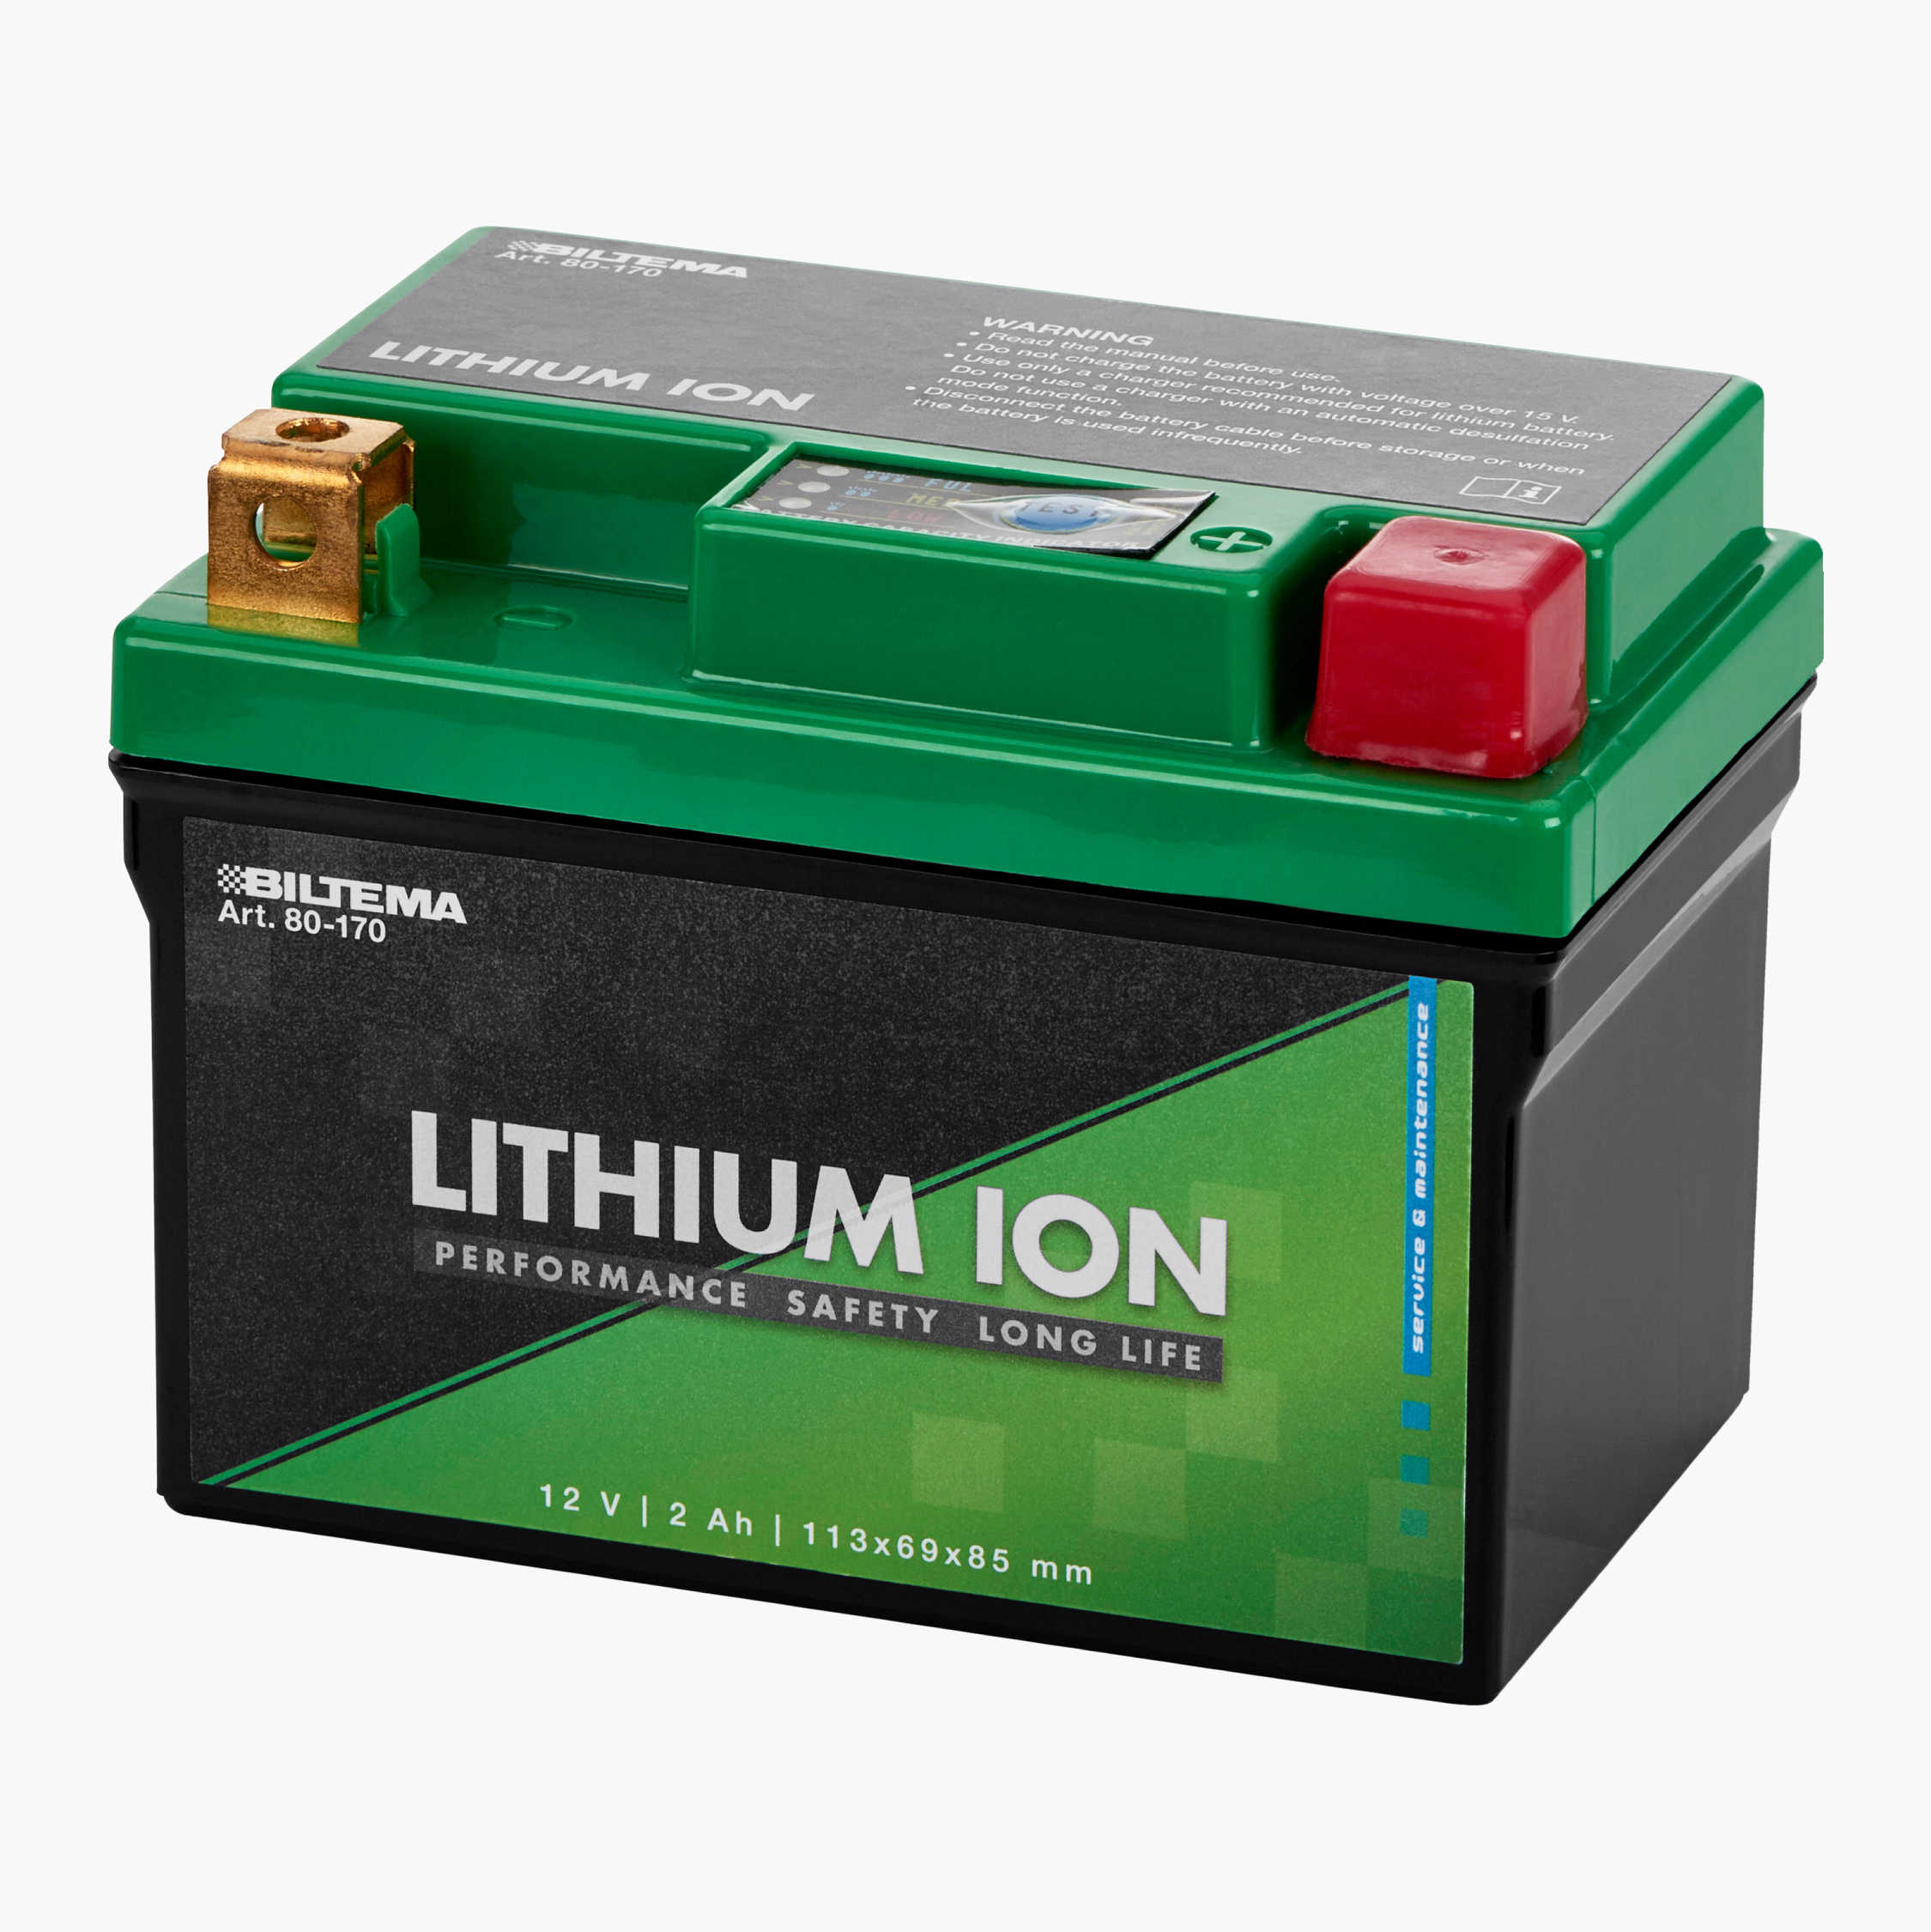 Baglæns Fremskridt møbel MC-batteri Litium LiFePO4, 12 V, 2 Ah, 113 x 69 x 85 mm - Biltema.dk